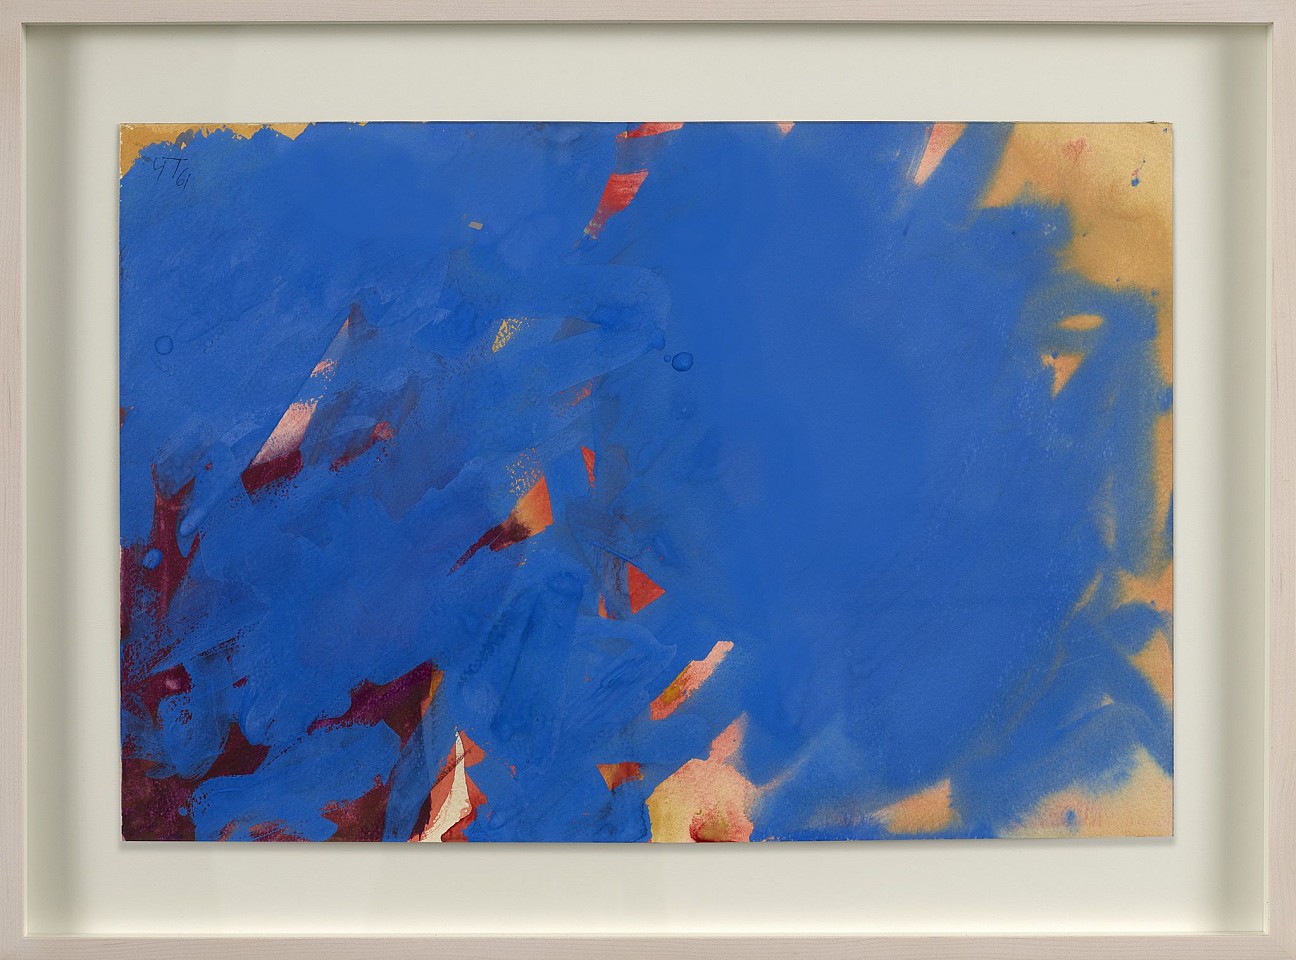 Yvonne Thomas, Through Blue | SOLD, 1961
Gouache on paper, 15 x 22 in. (38.1 x 55.9 cm)
THO-00083